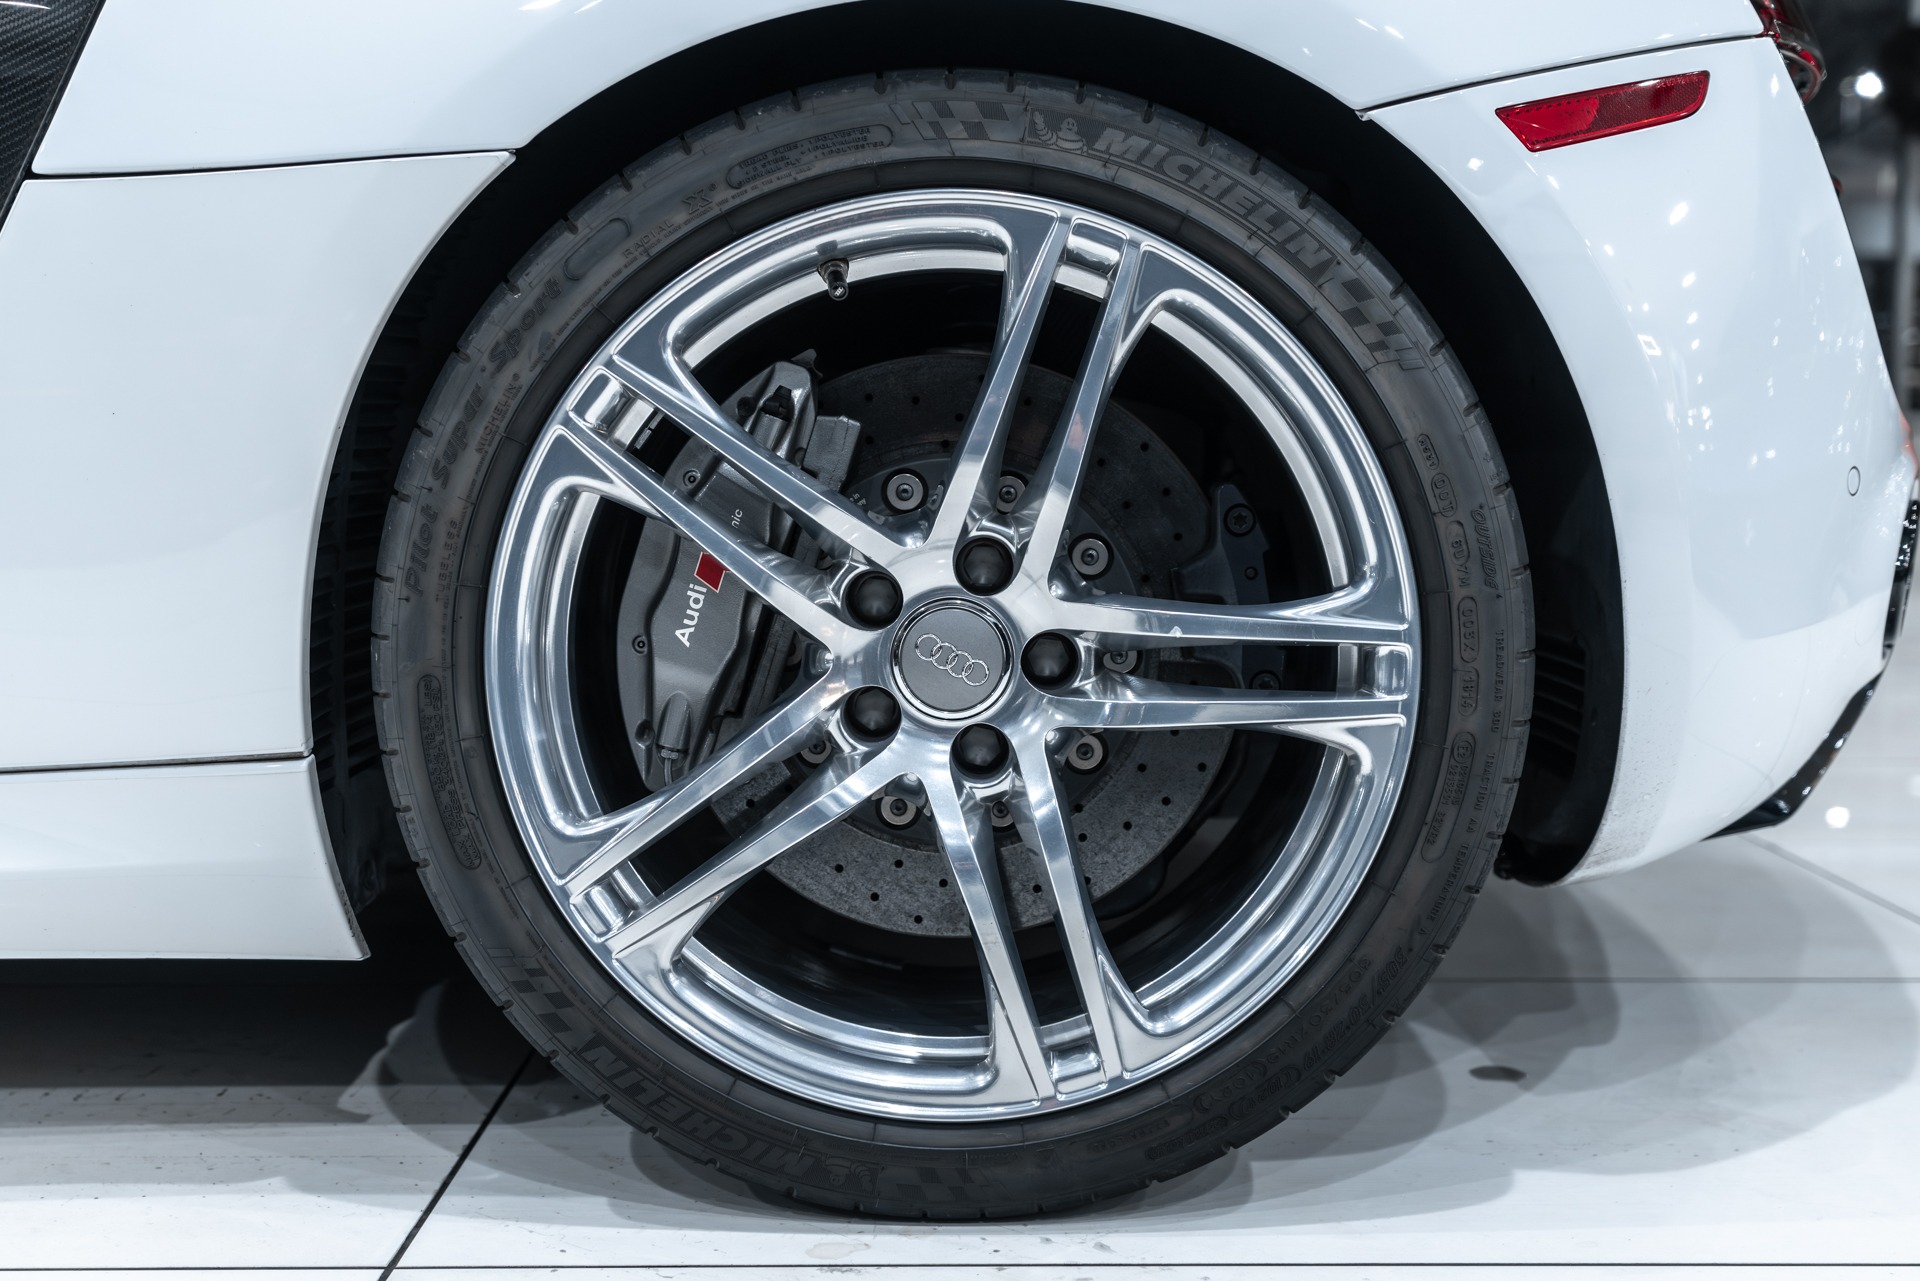 Used-2012-Audi-R8-52-quattro-Coupe-6-Speed-Manual-Ceramic-Brakes-Capristo-Exhaust-LOADED